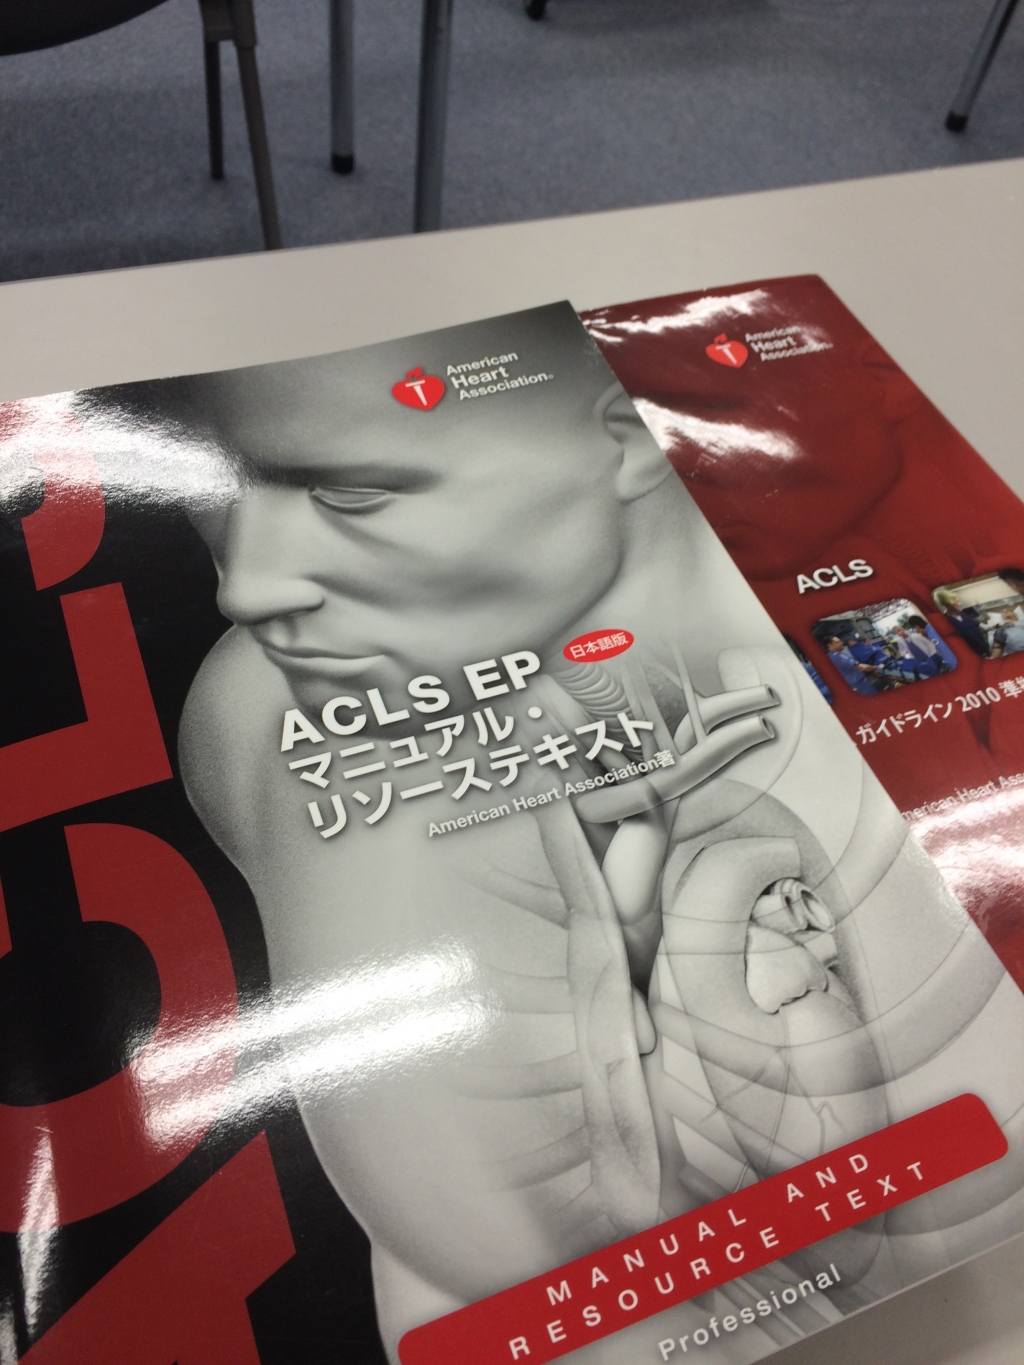 ACLS EP マニュアル&リソーステキスト 2015 日本語版健康/医学